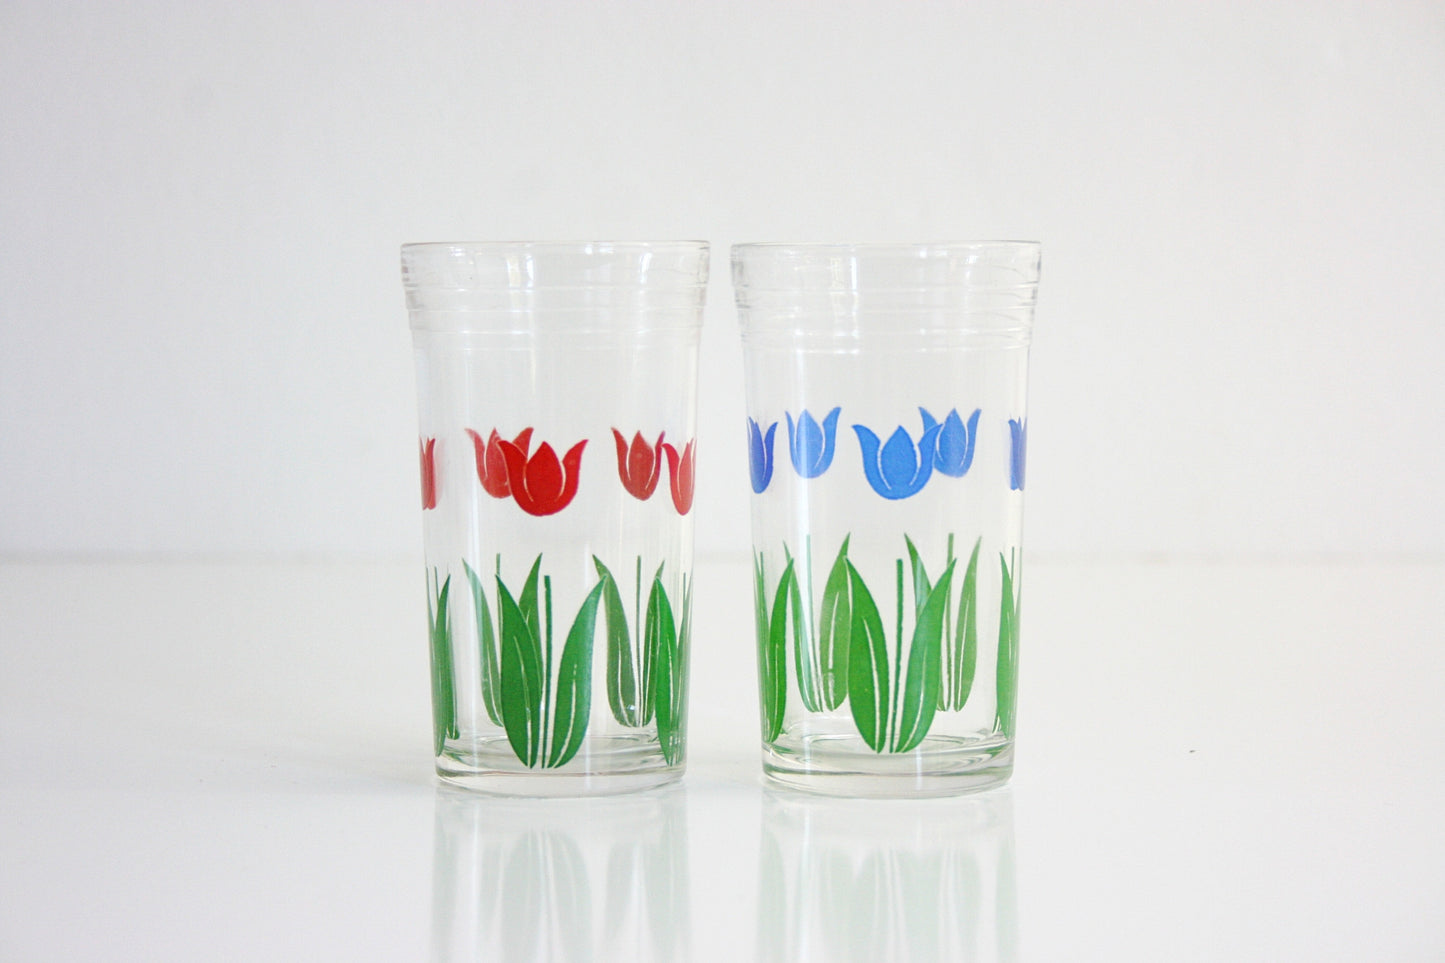 SOLD - Vintage 1930s Swanky Swigs Tulip Glasses / Depression Era Flower Juice Glasses